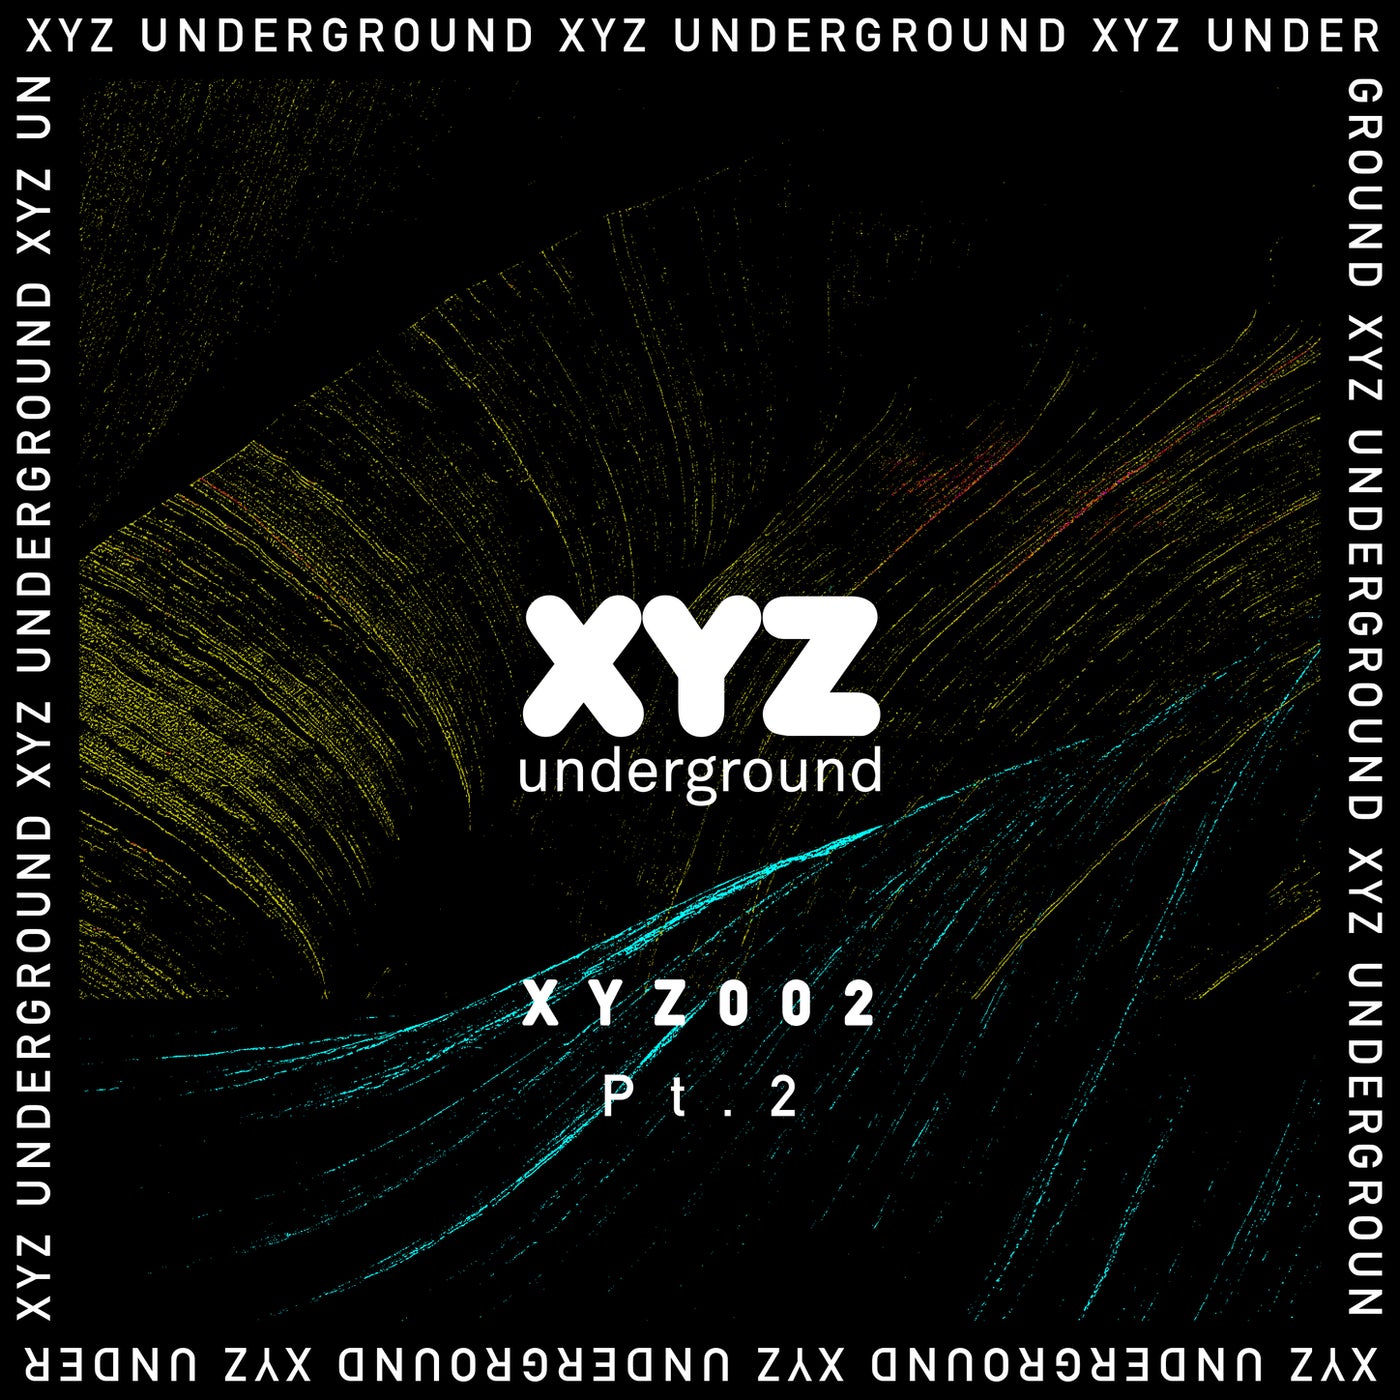 XYZ Underground Pt. 2